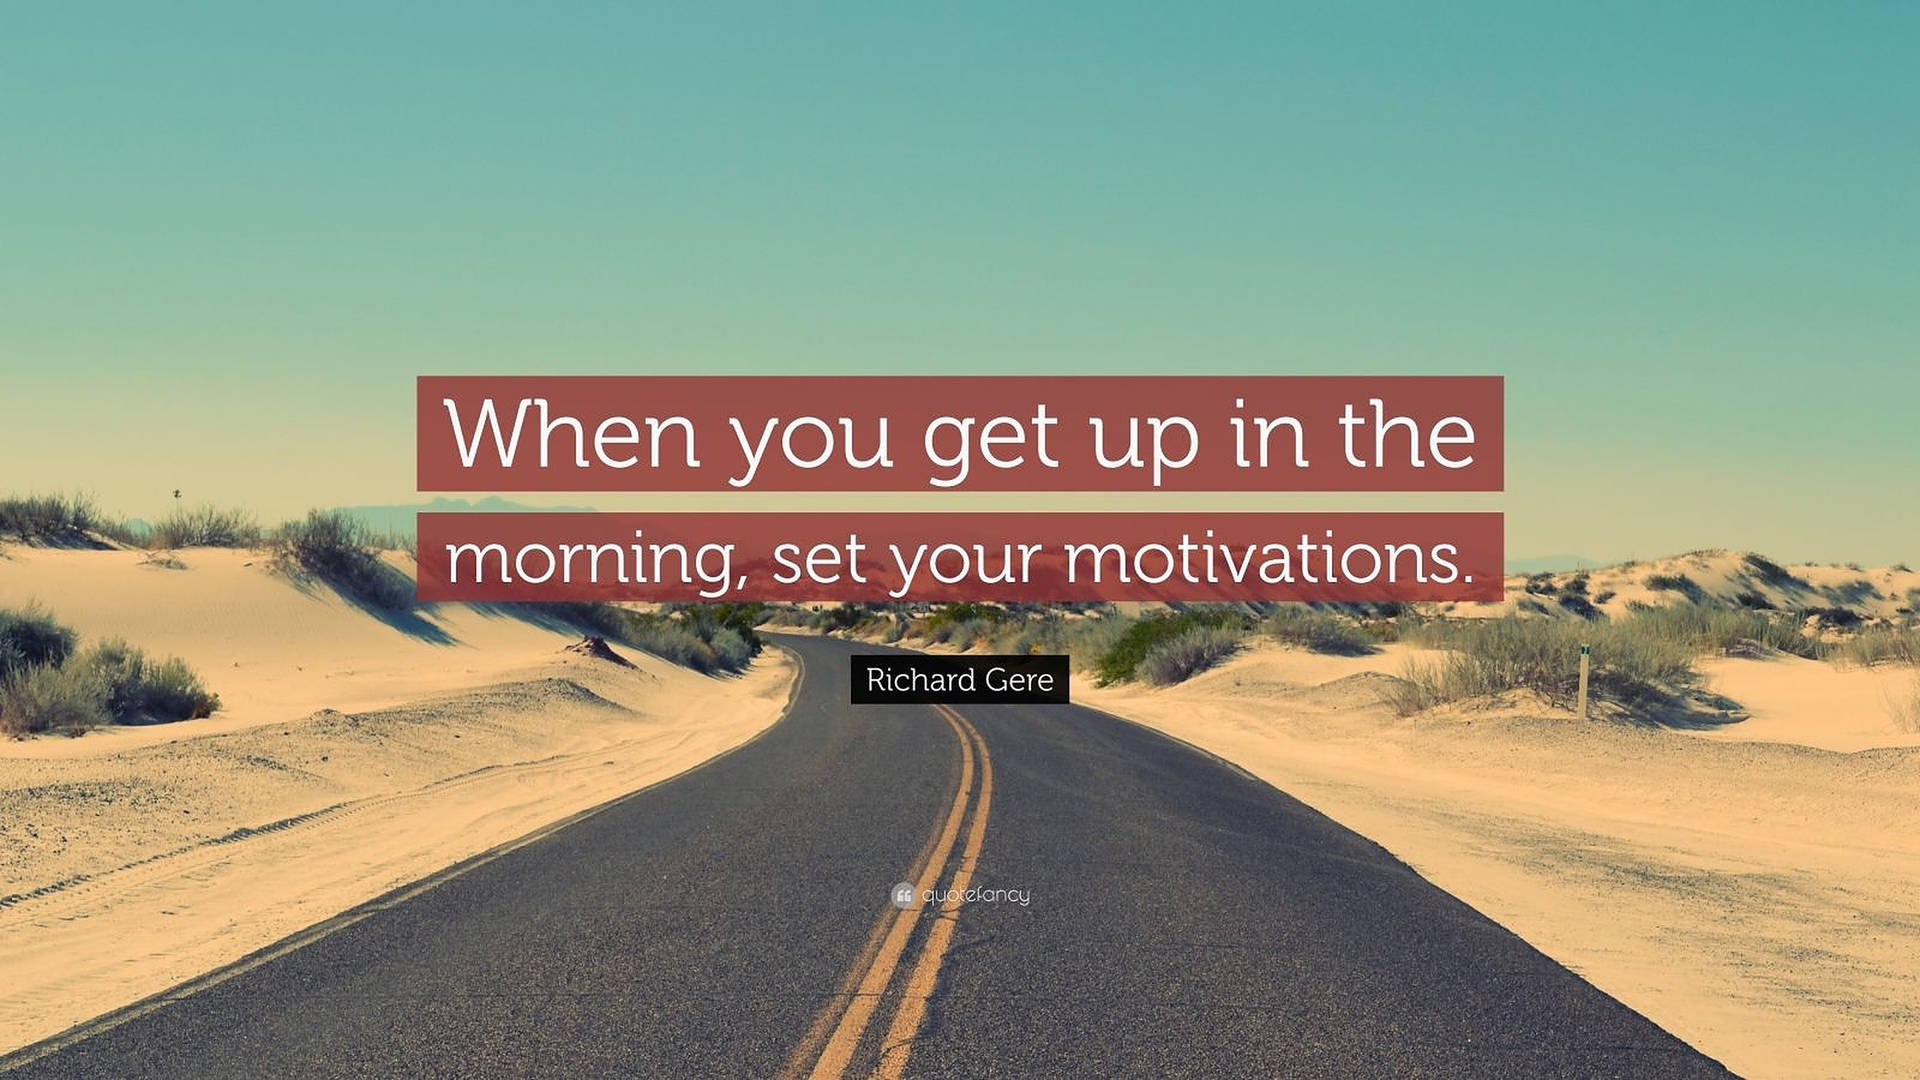 Richard Gere Motivational Quote Wallpaper